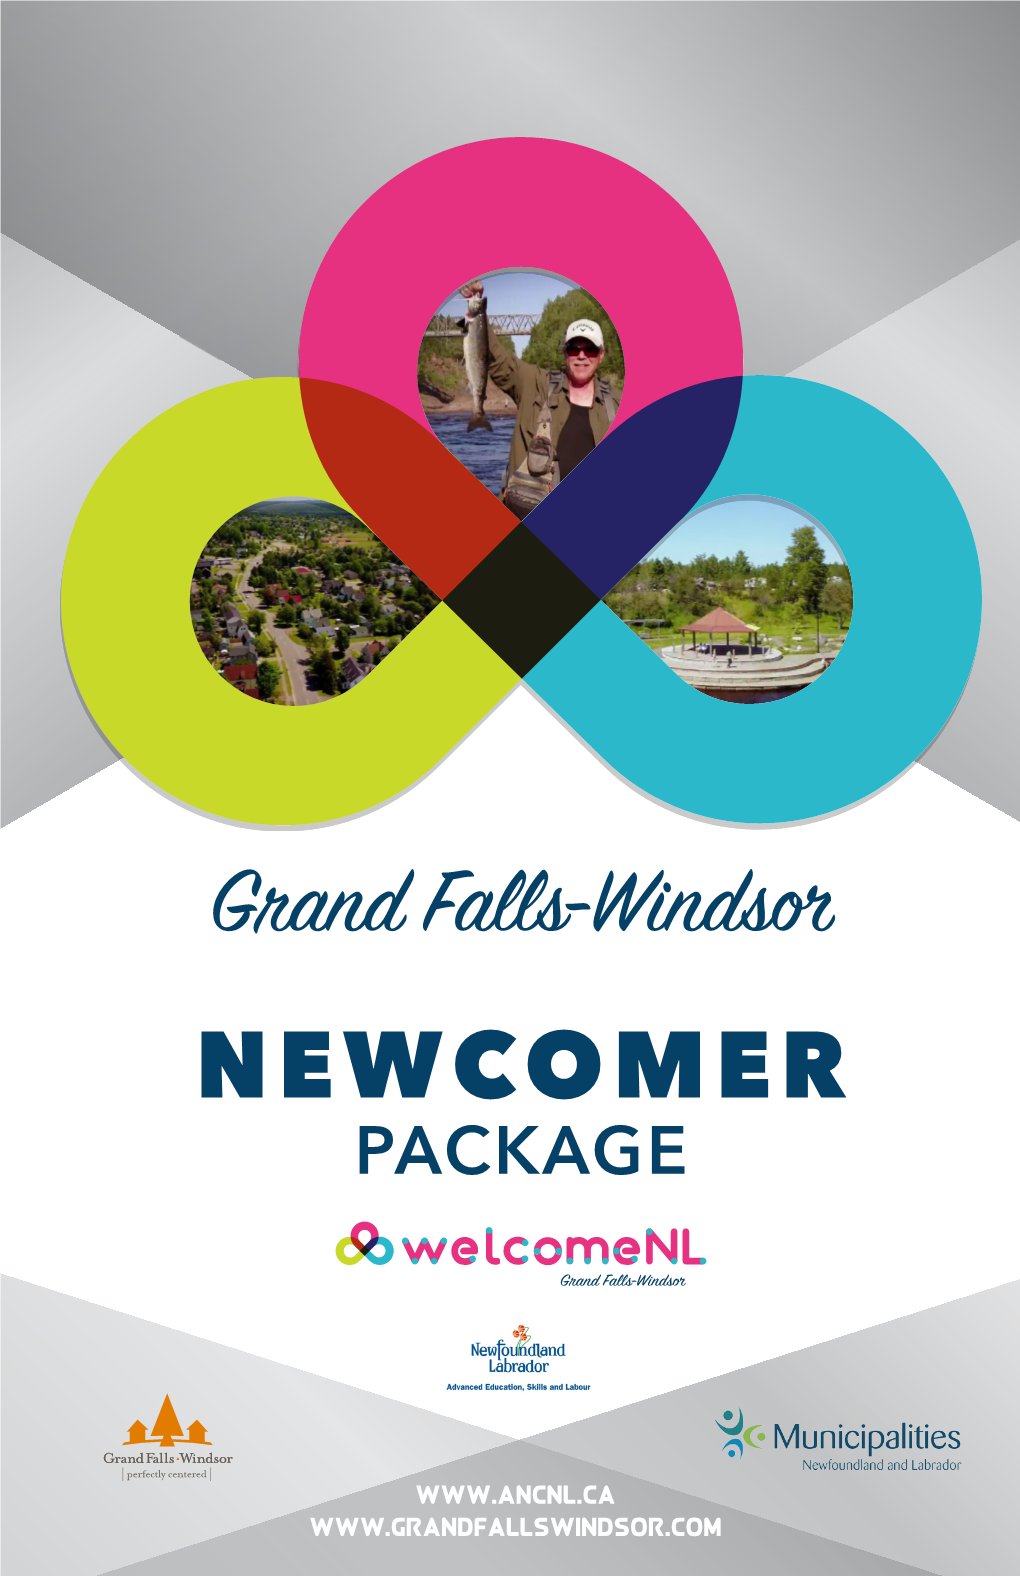 Grand Falls-Windsor